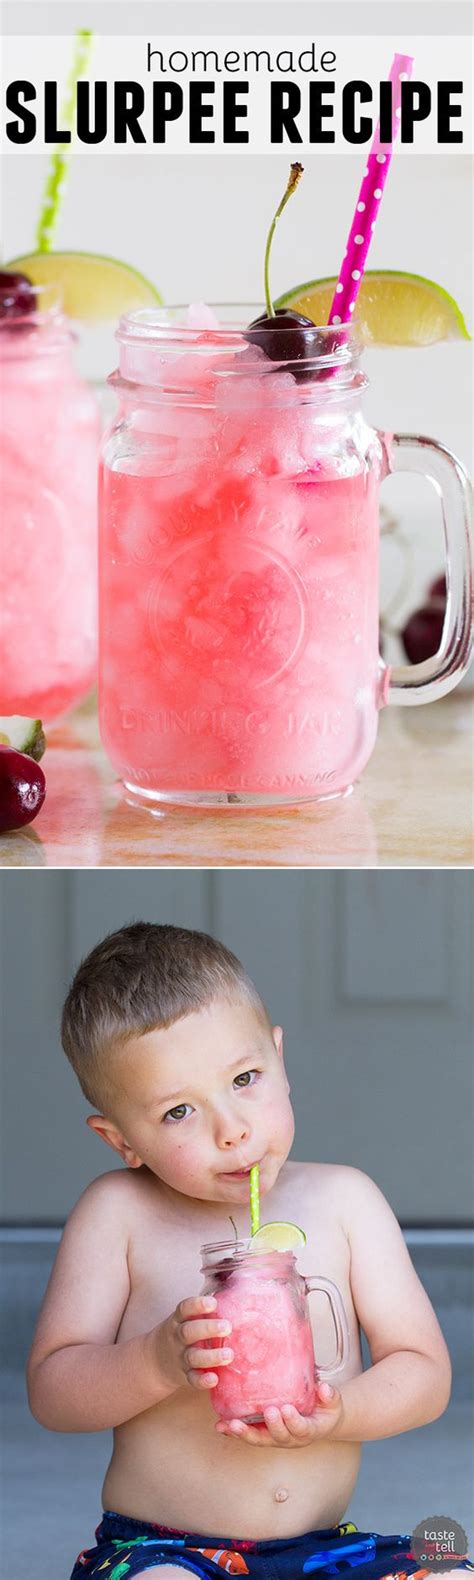 Homemade Slurpee Recipe Video Recipe Frozen Drinks Smoothie